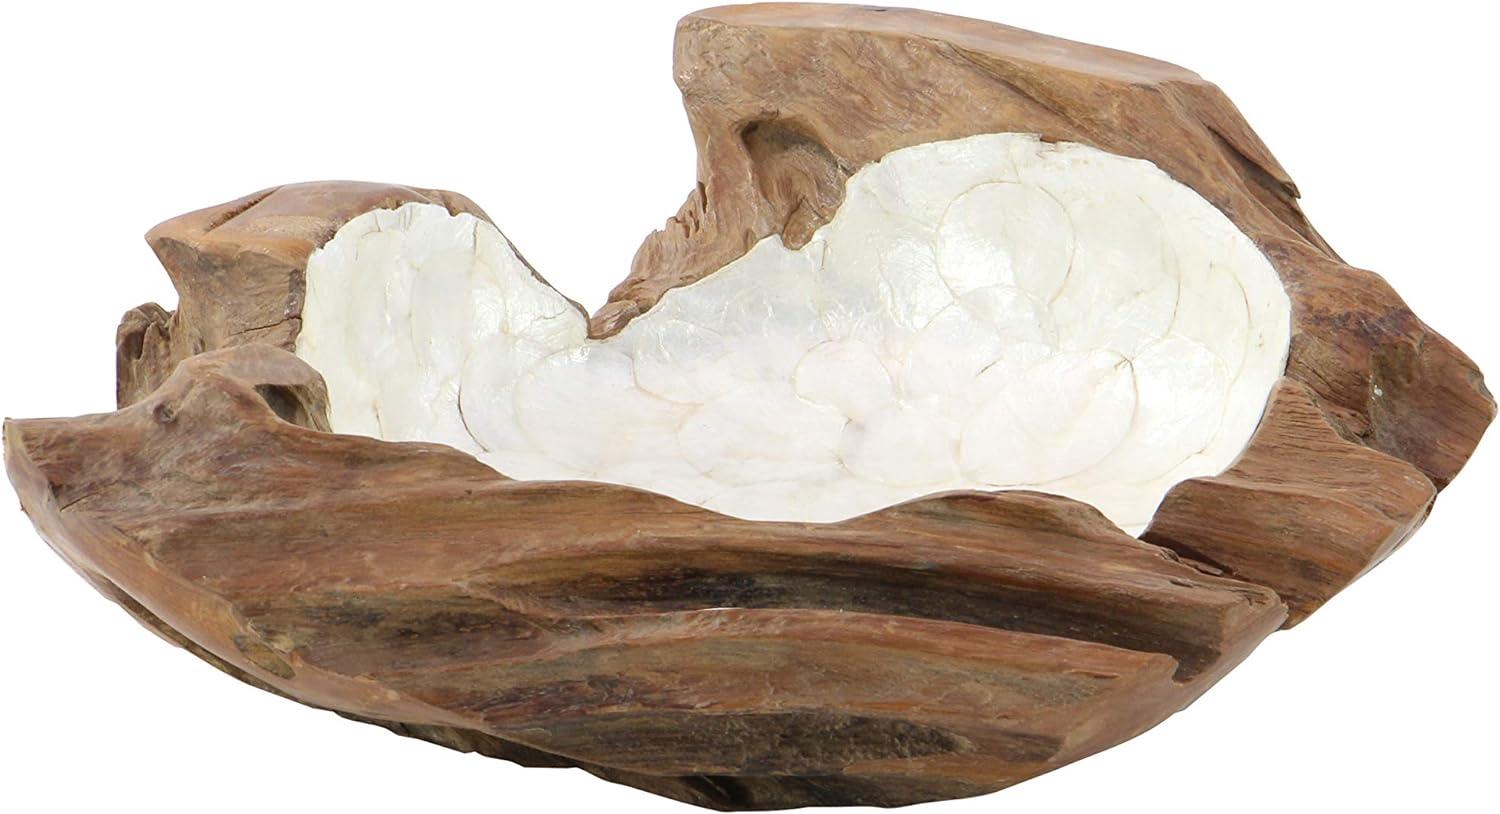 16" Teak Wood Handcrafted Live Edge Decorative Bowl with Capiz Interior